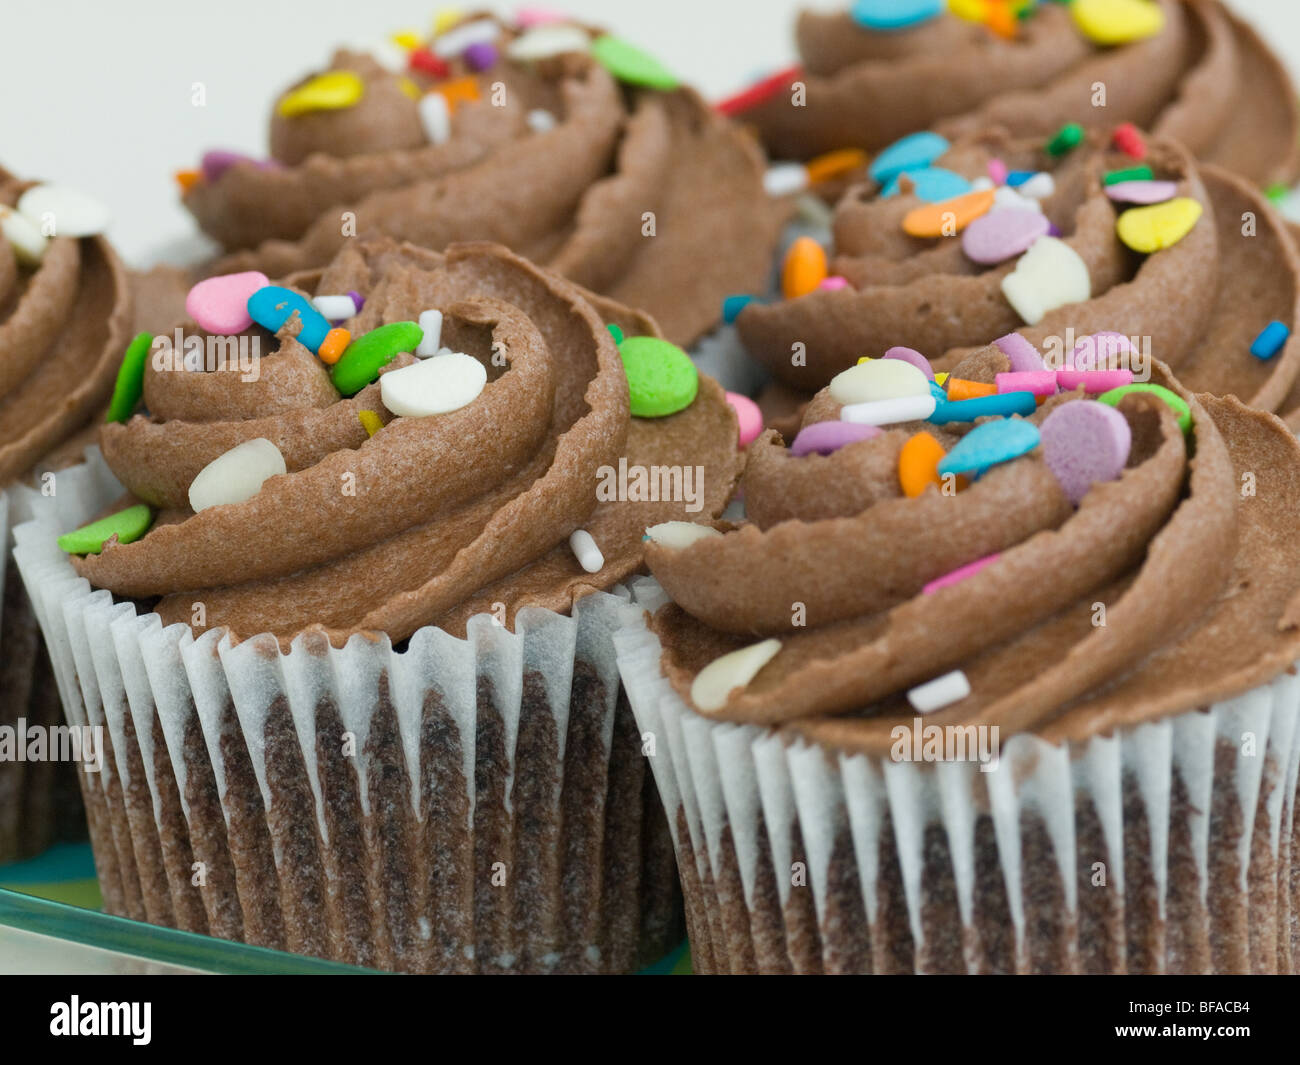 Yummy chocolate cupcakes with sprinkles. Stock Photo